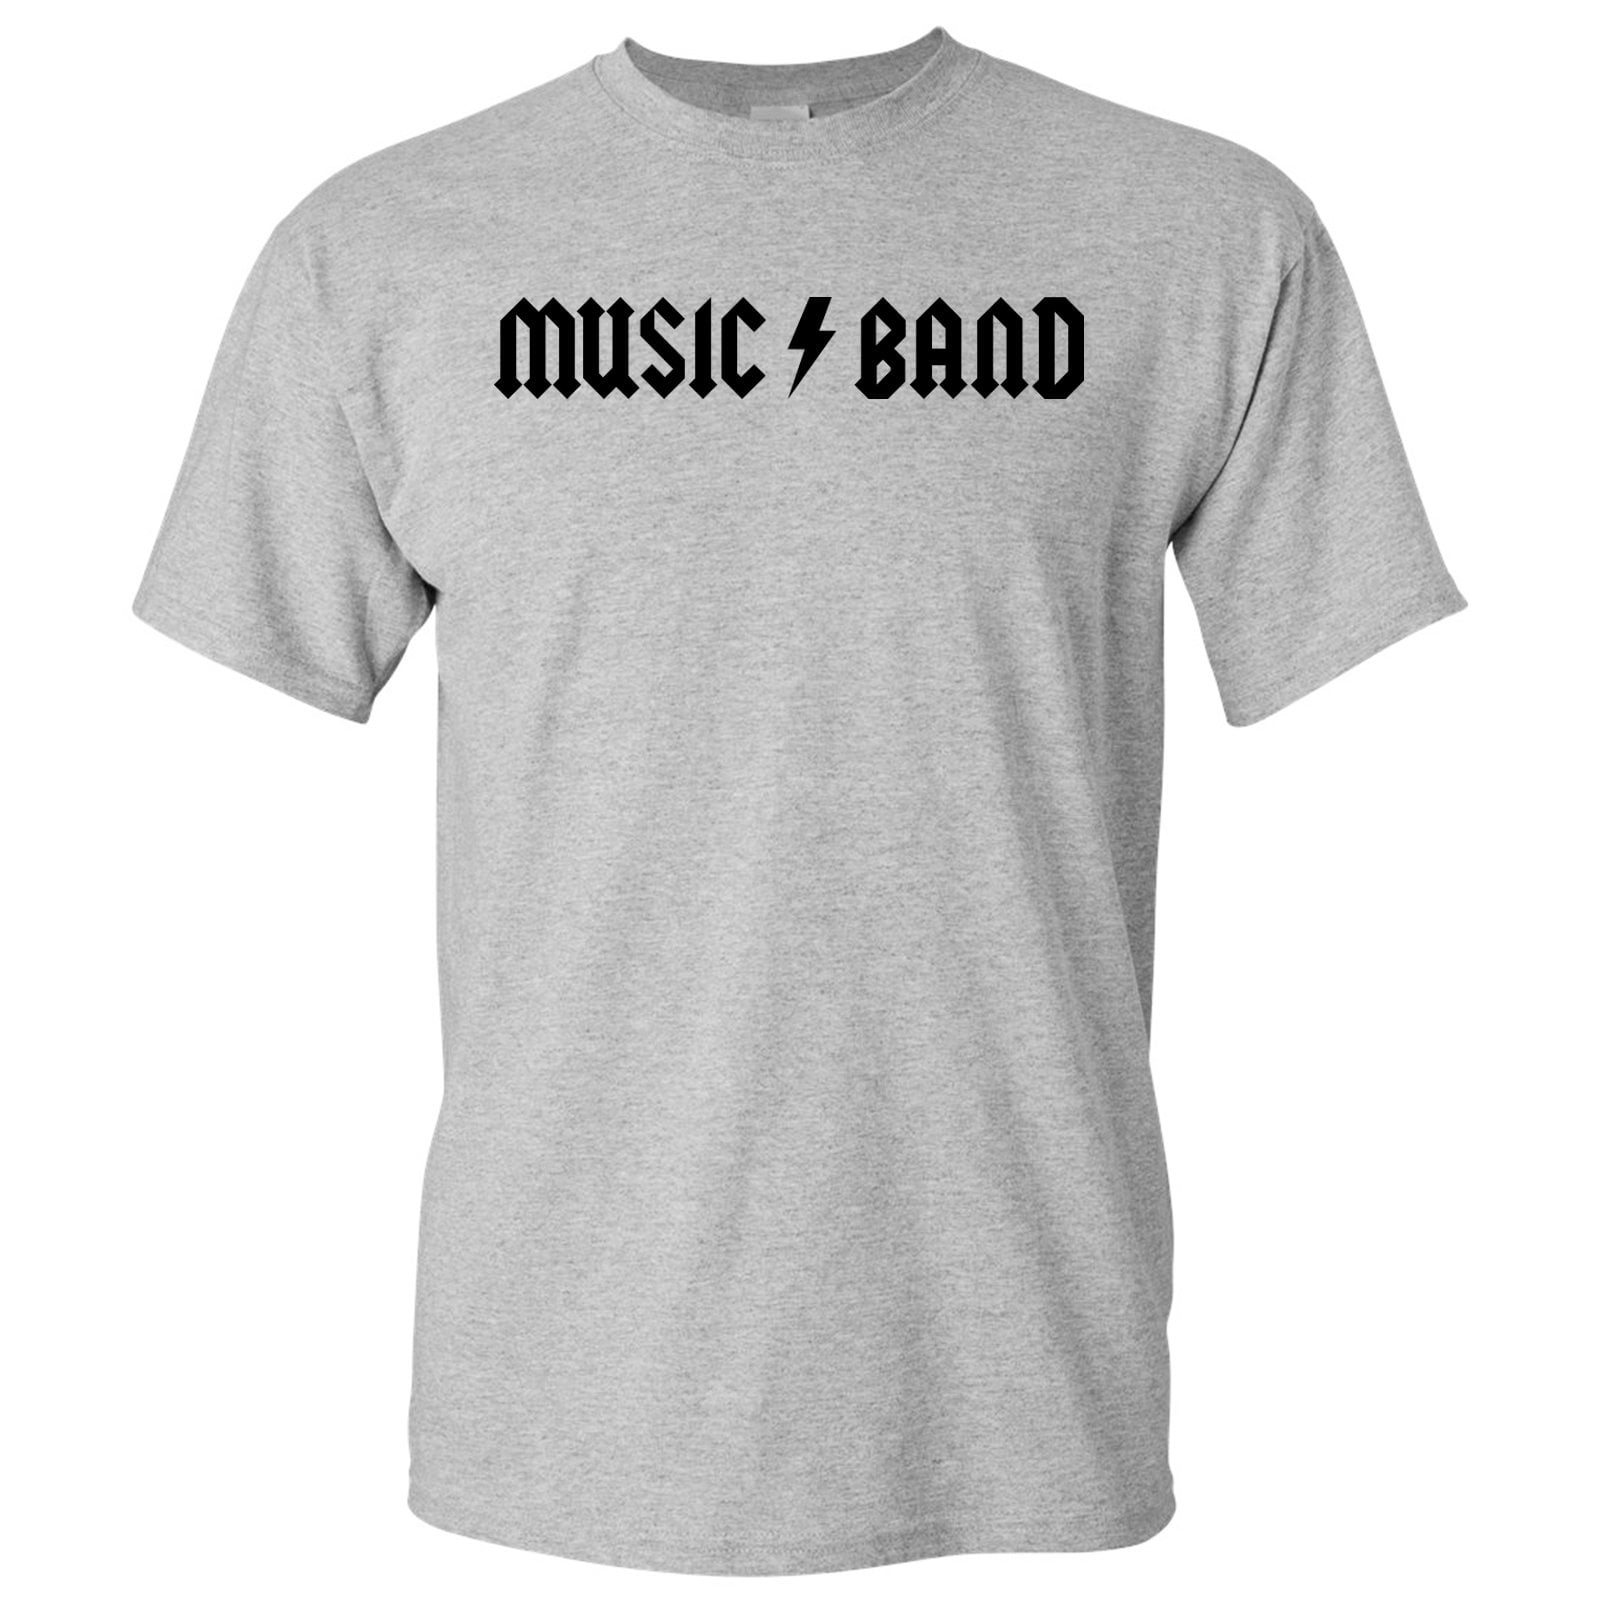 Music Band - Funny Rock Metal Band Parody Fellow Kids Meme T Shirt - Medium - Sport Grey -